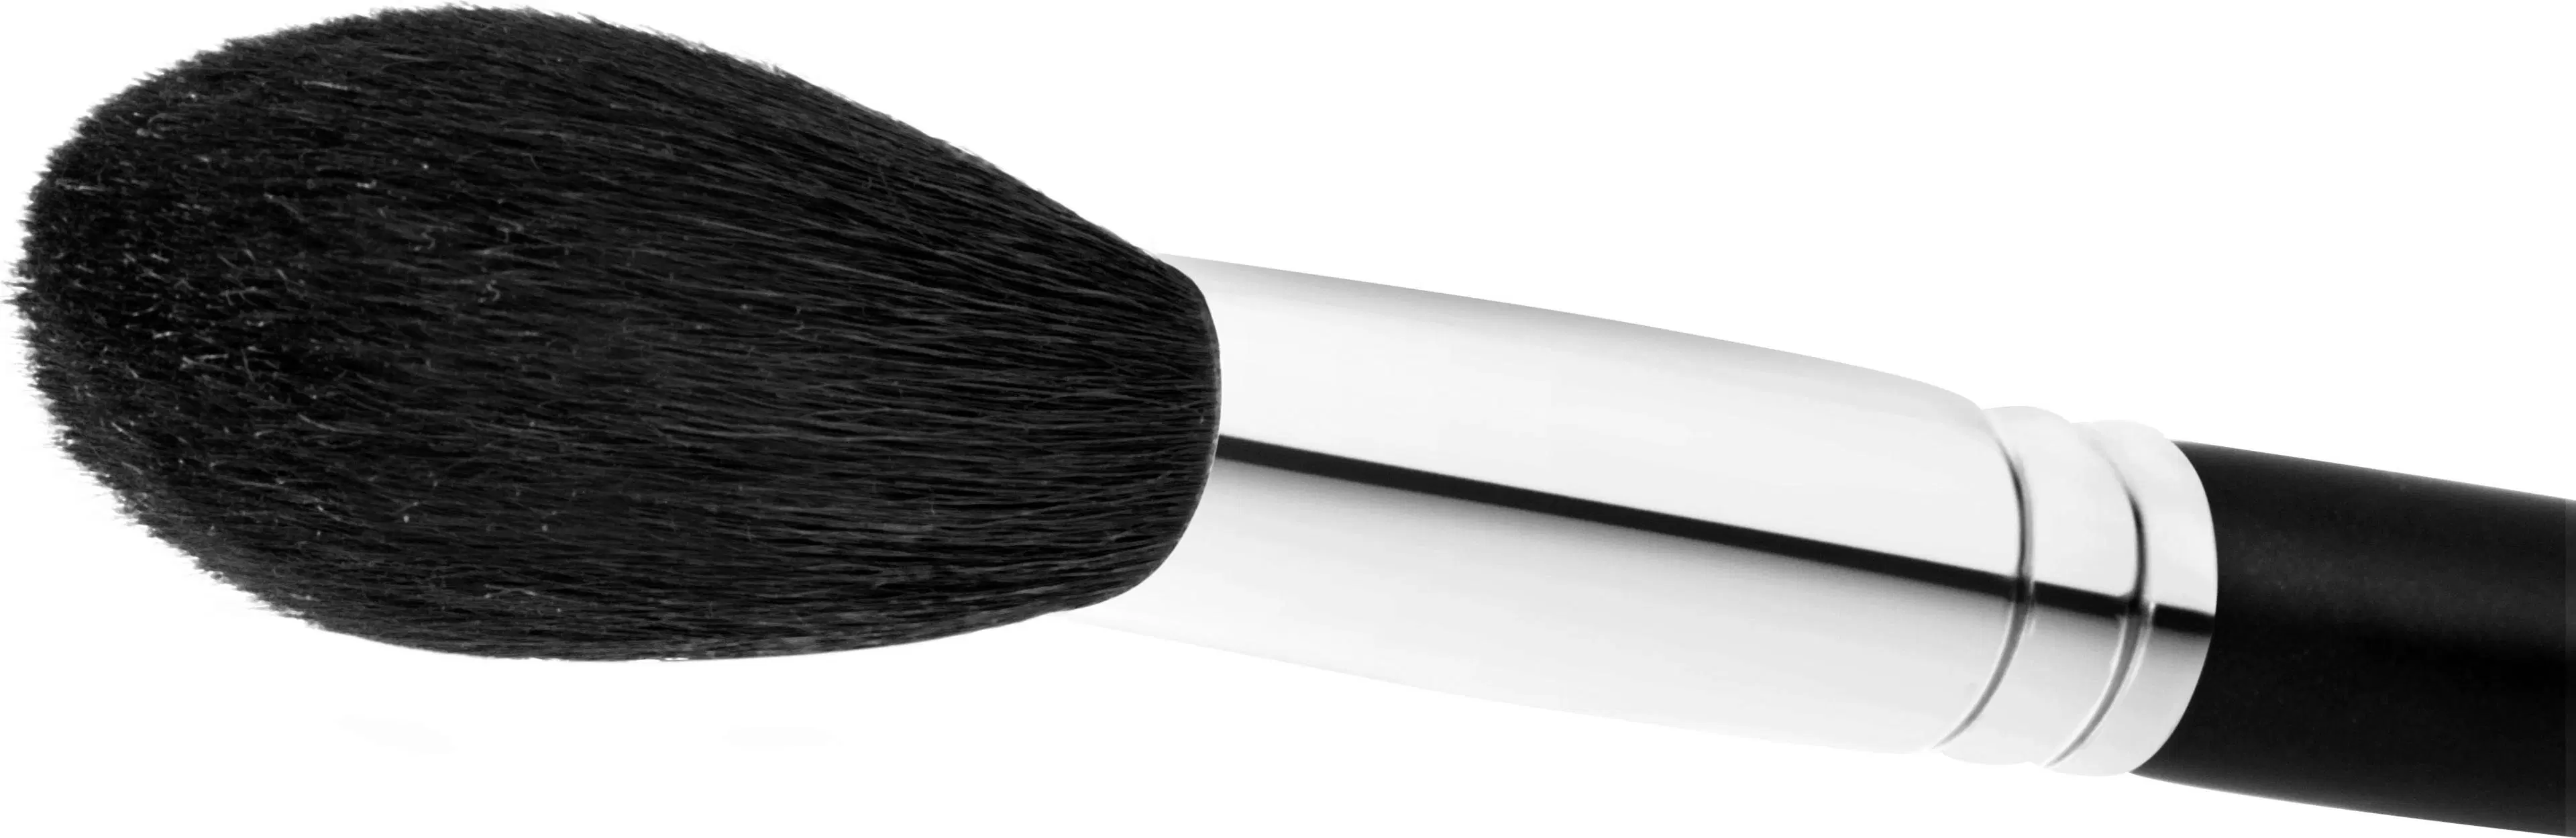 MAC Large Powder Brush 150s sivellin